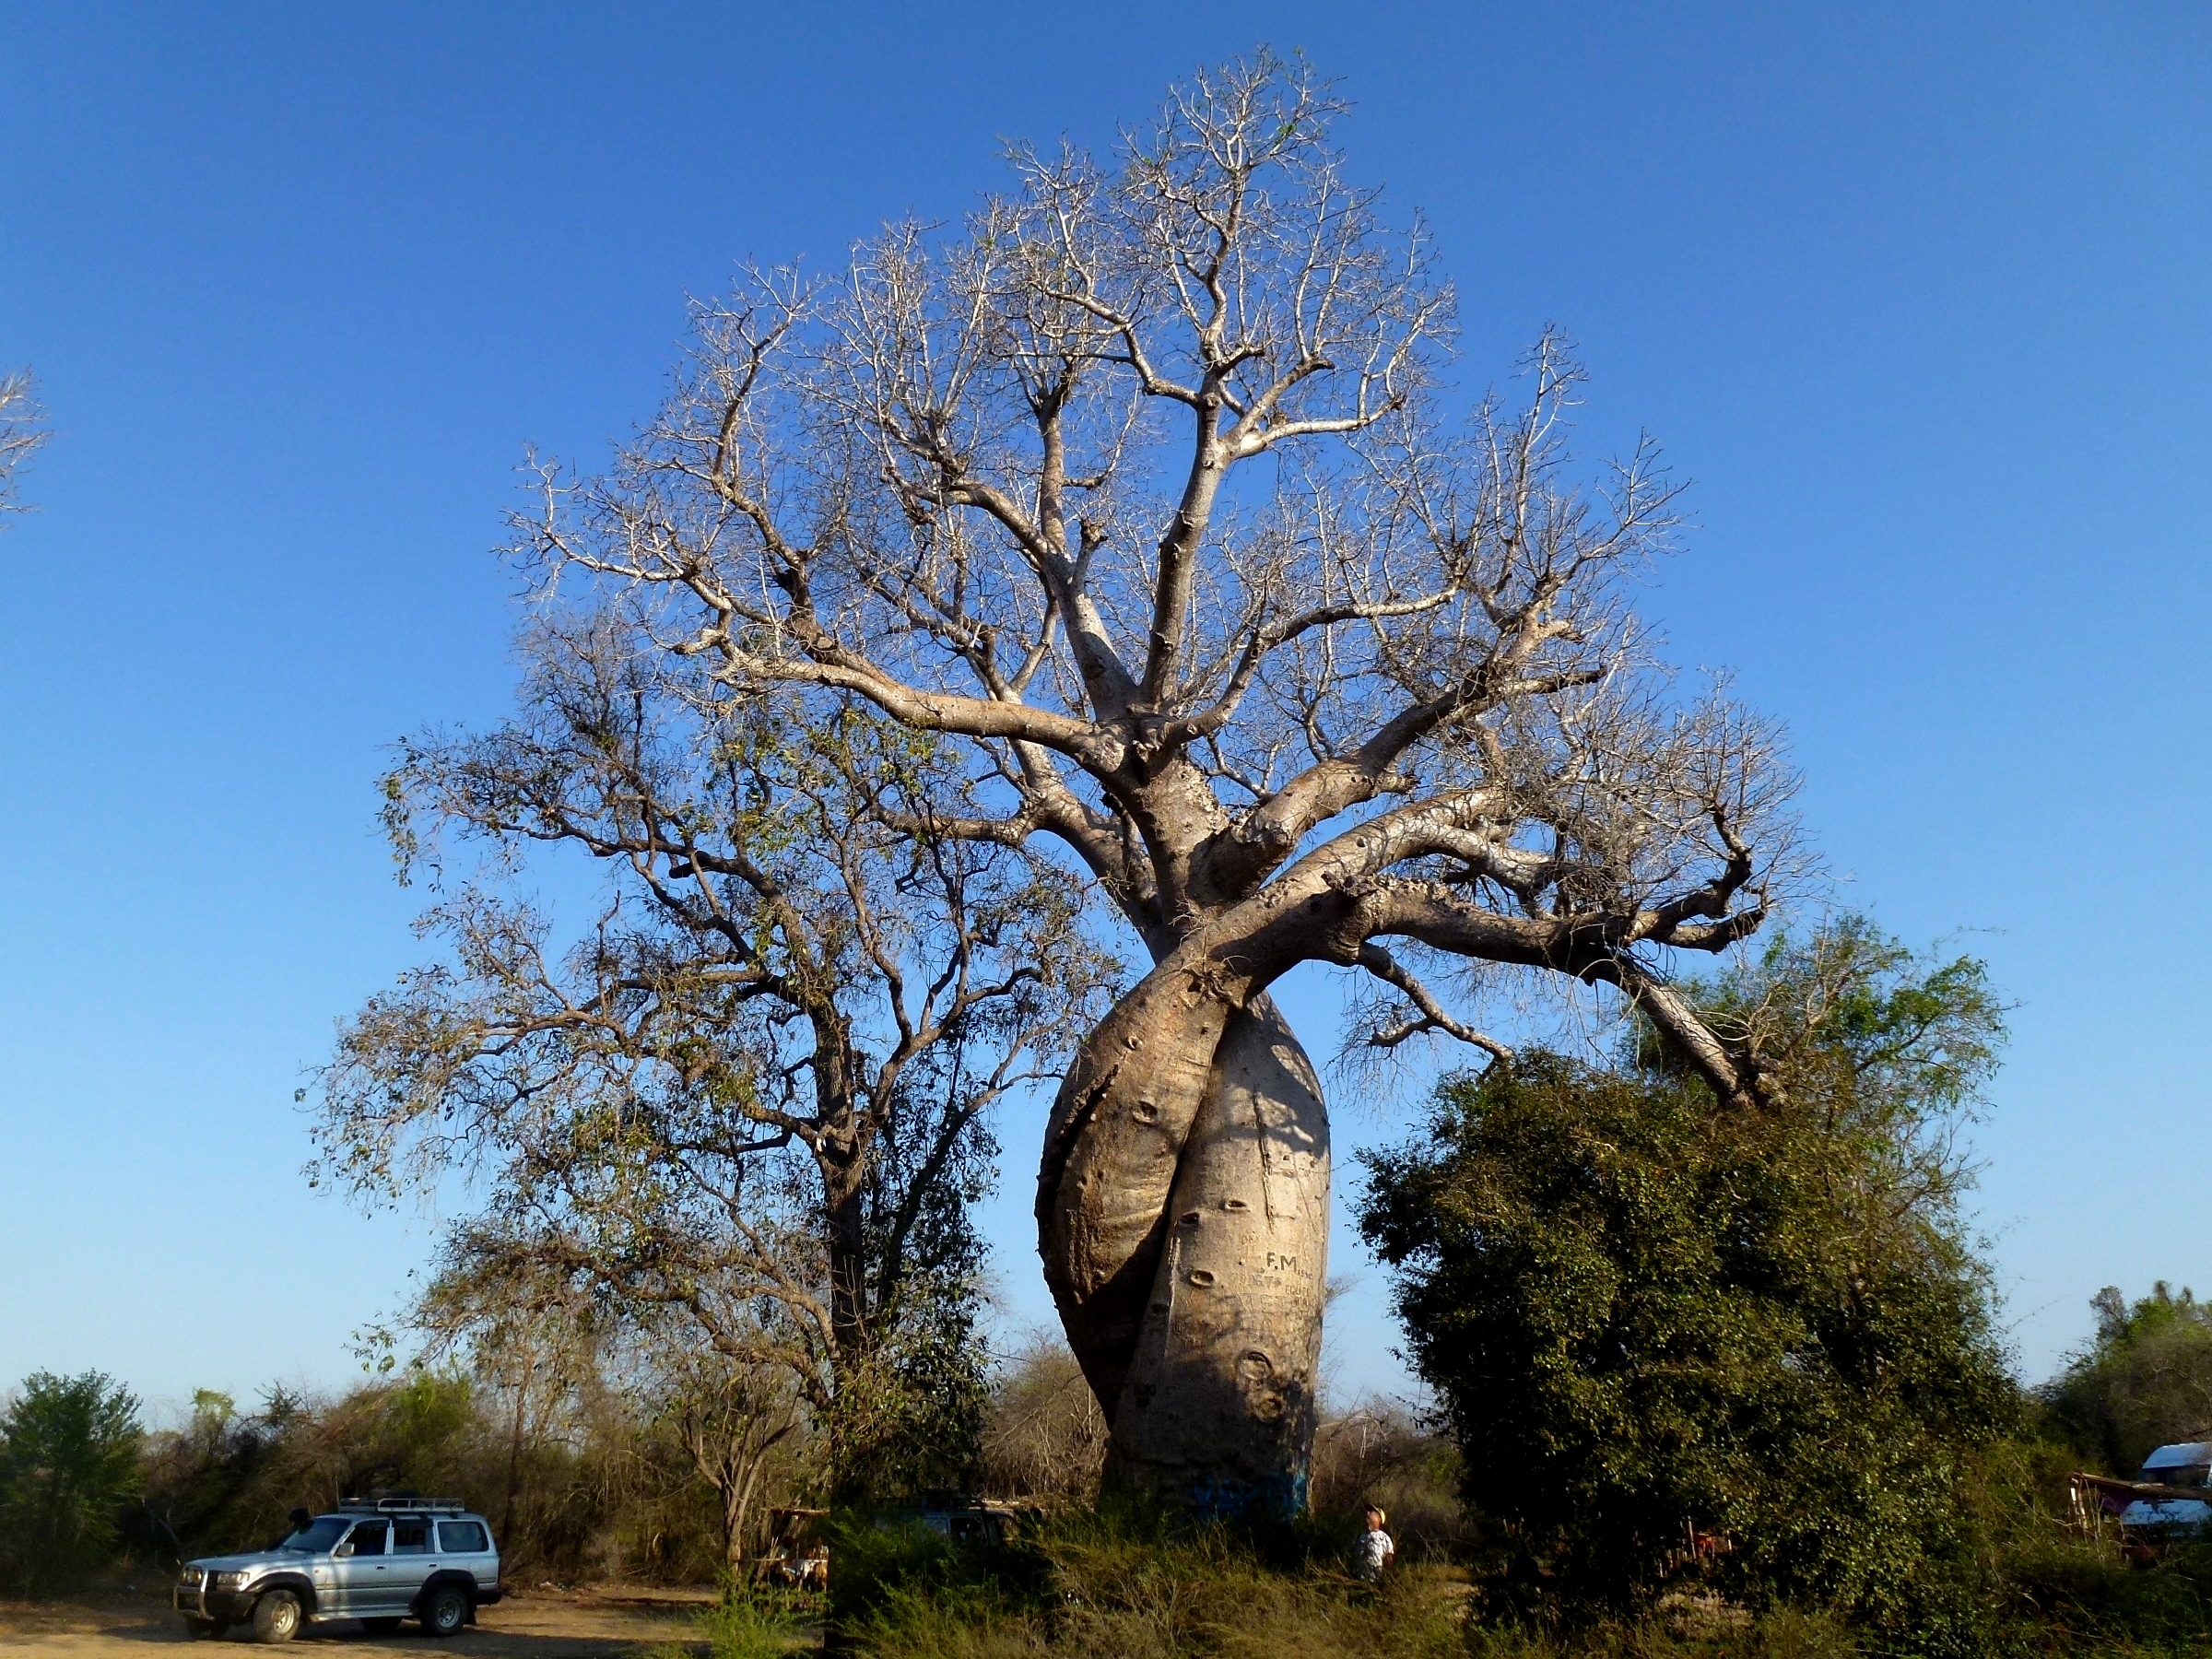 Amoureux_Baobab_Morondava_Madagascar_-_panoramio.jpg (2400×1800)